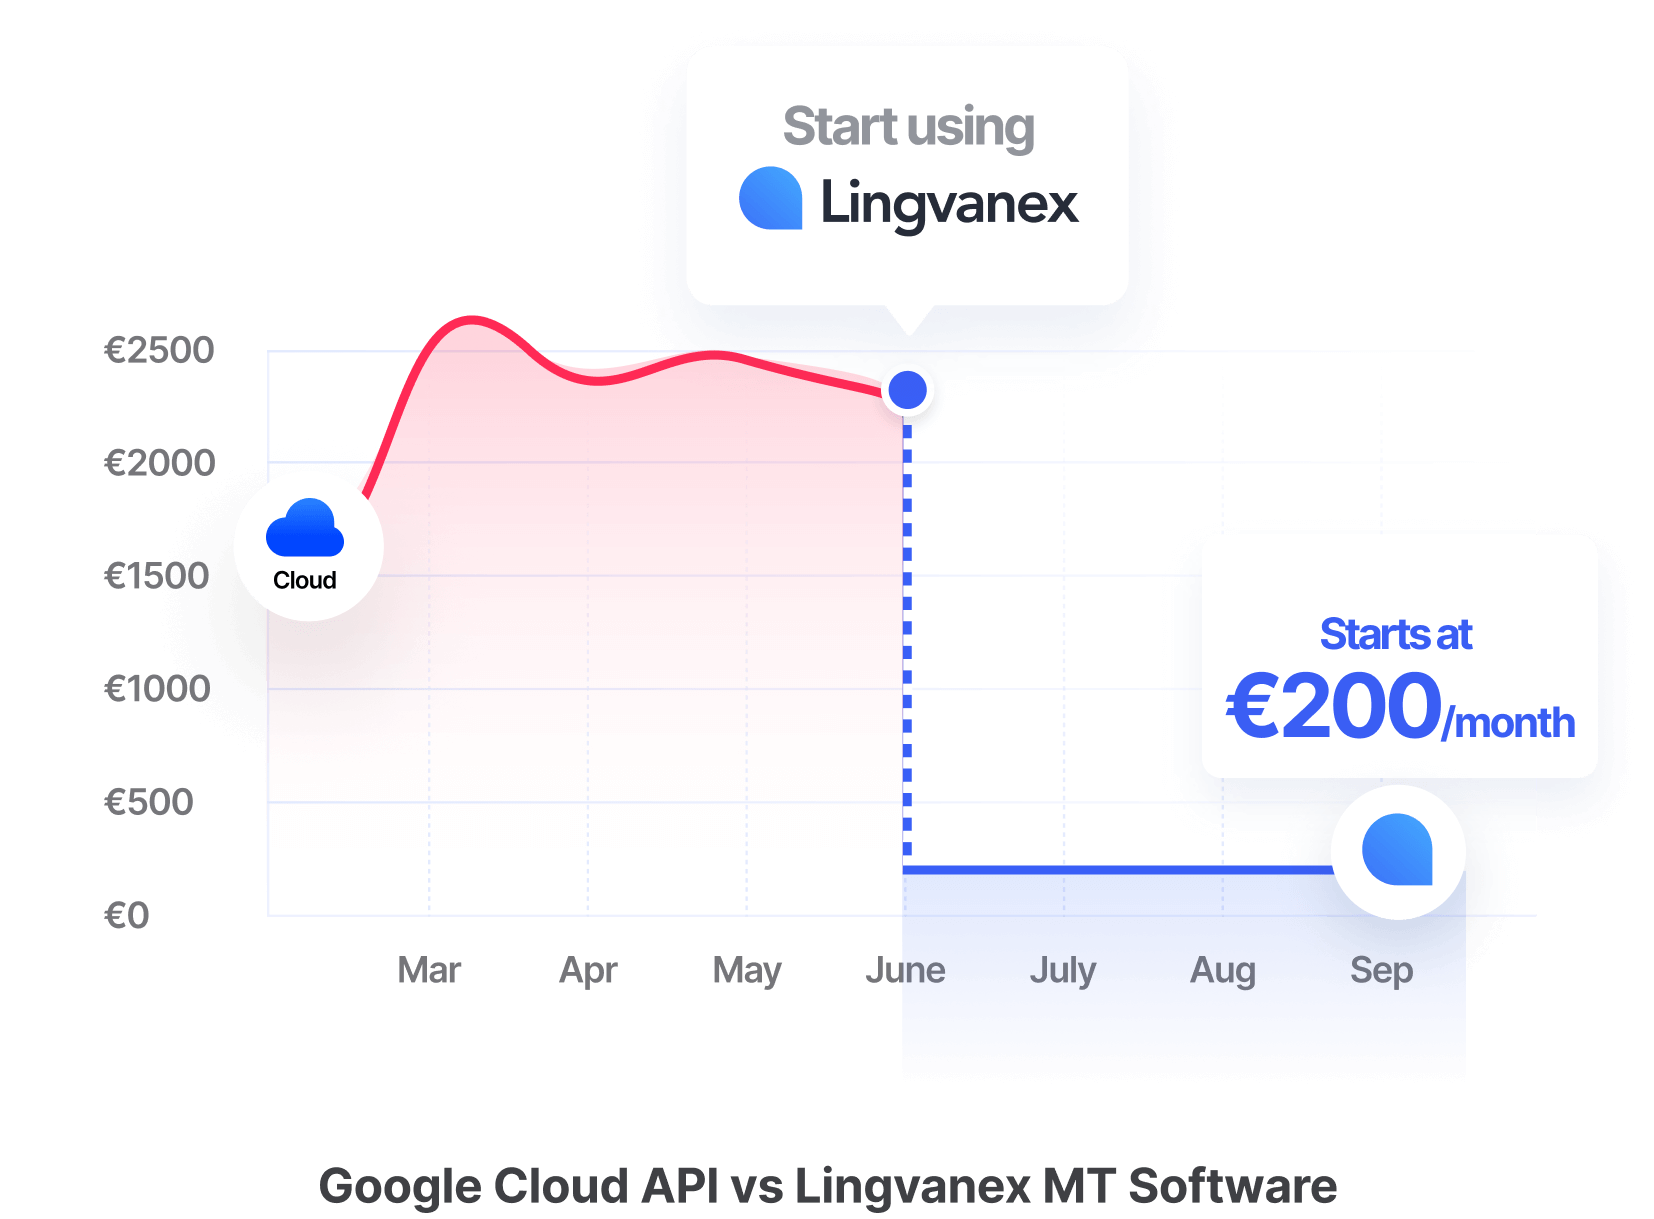 Google Cloud API gegenüber Lingvanex MÜ-Software